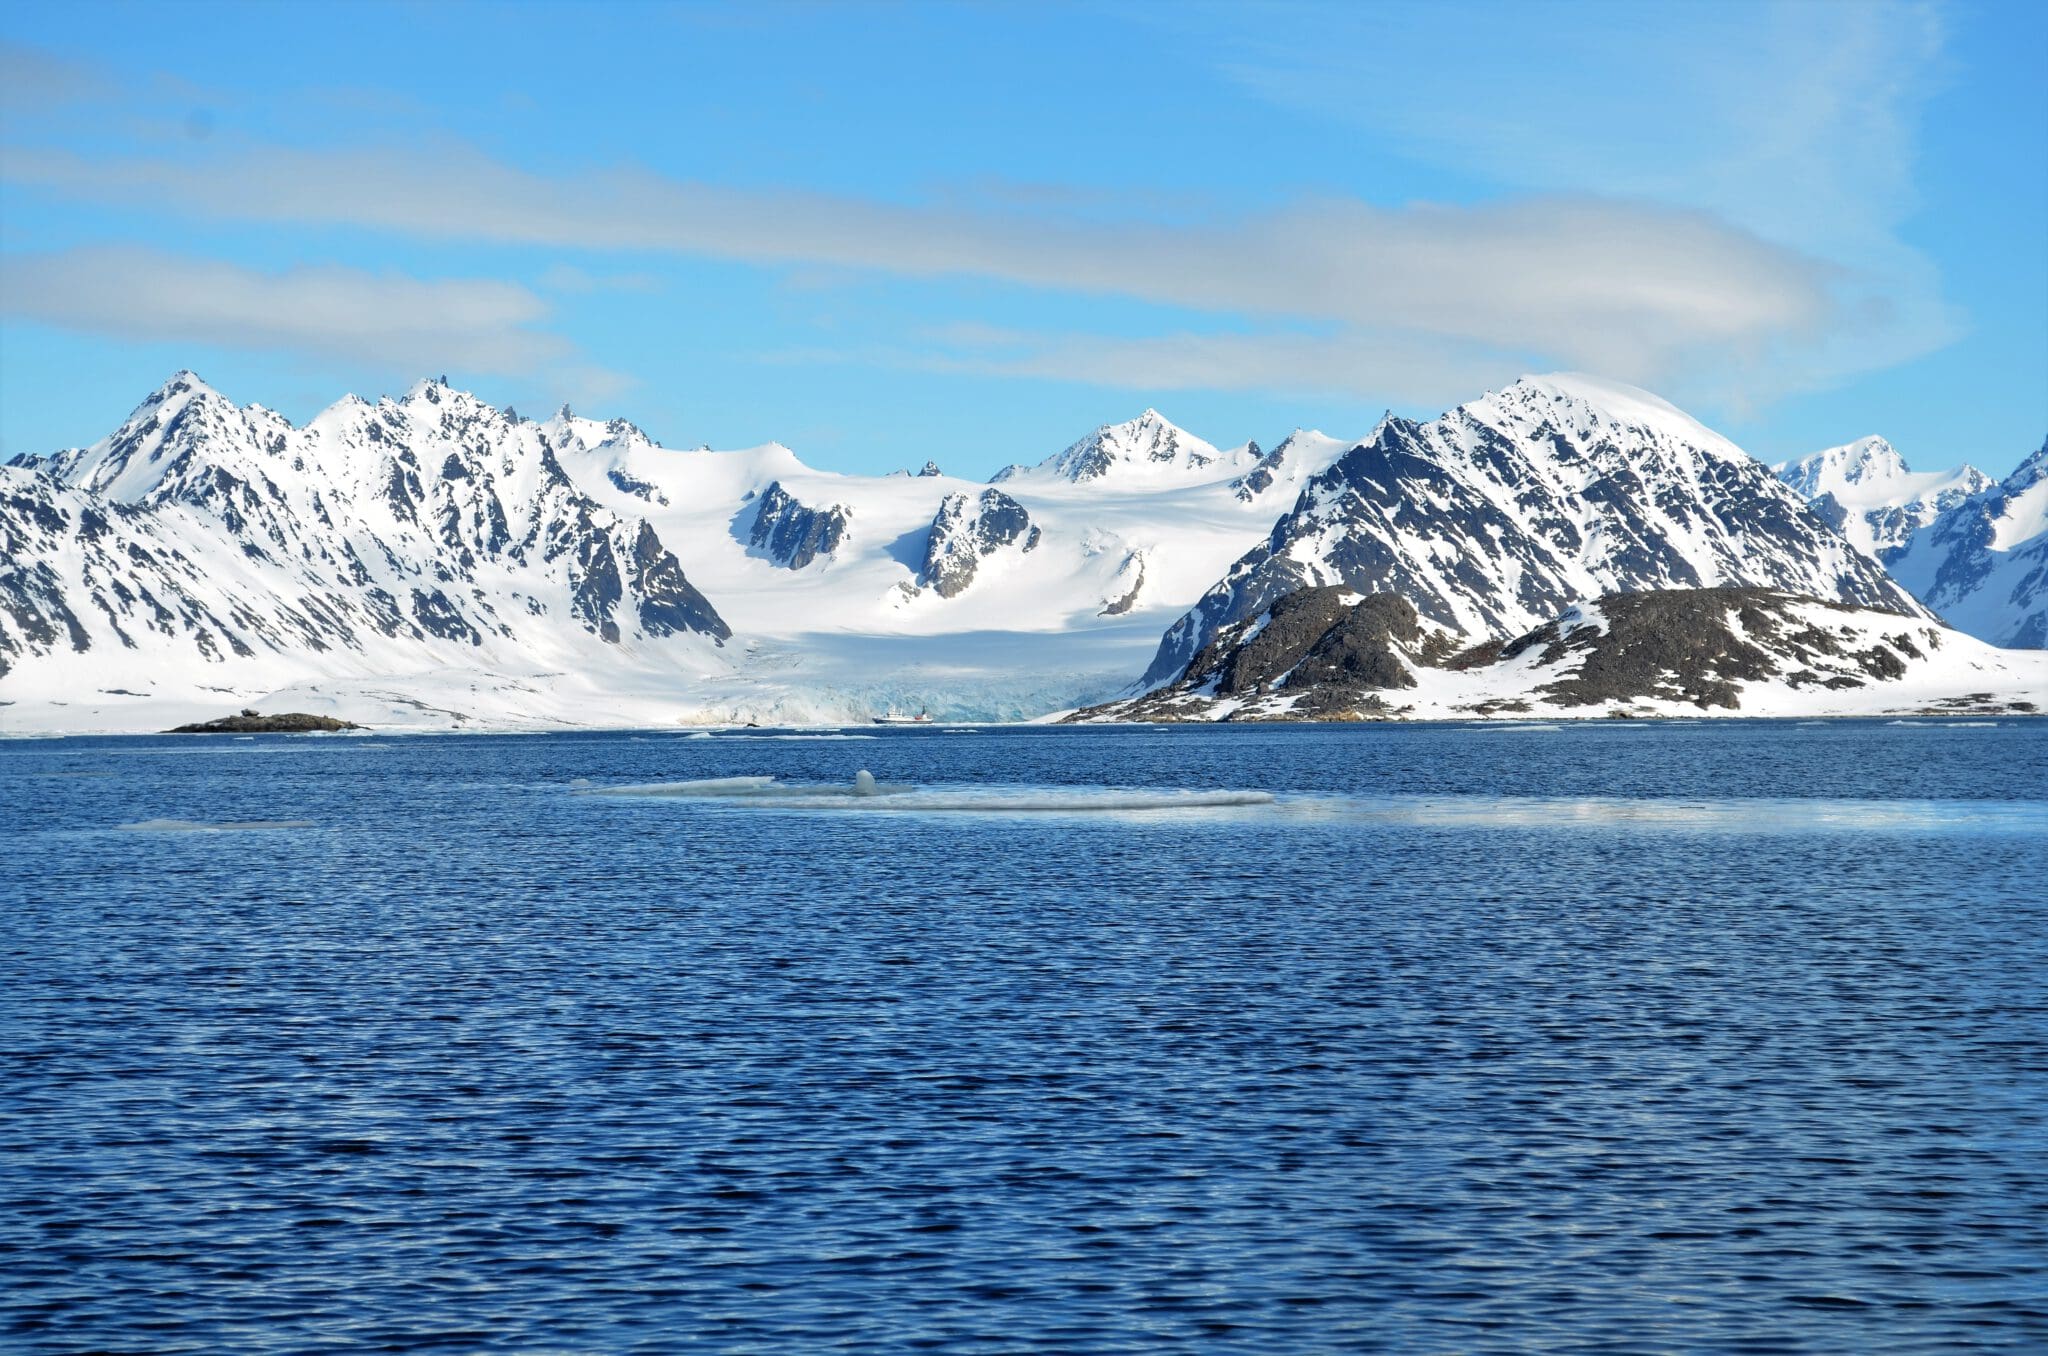 Fra forskning til forvaltning for et bærekraftig Arktis